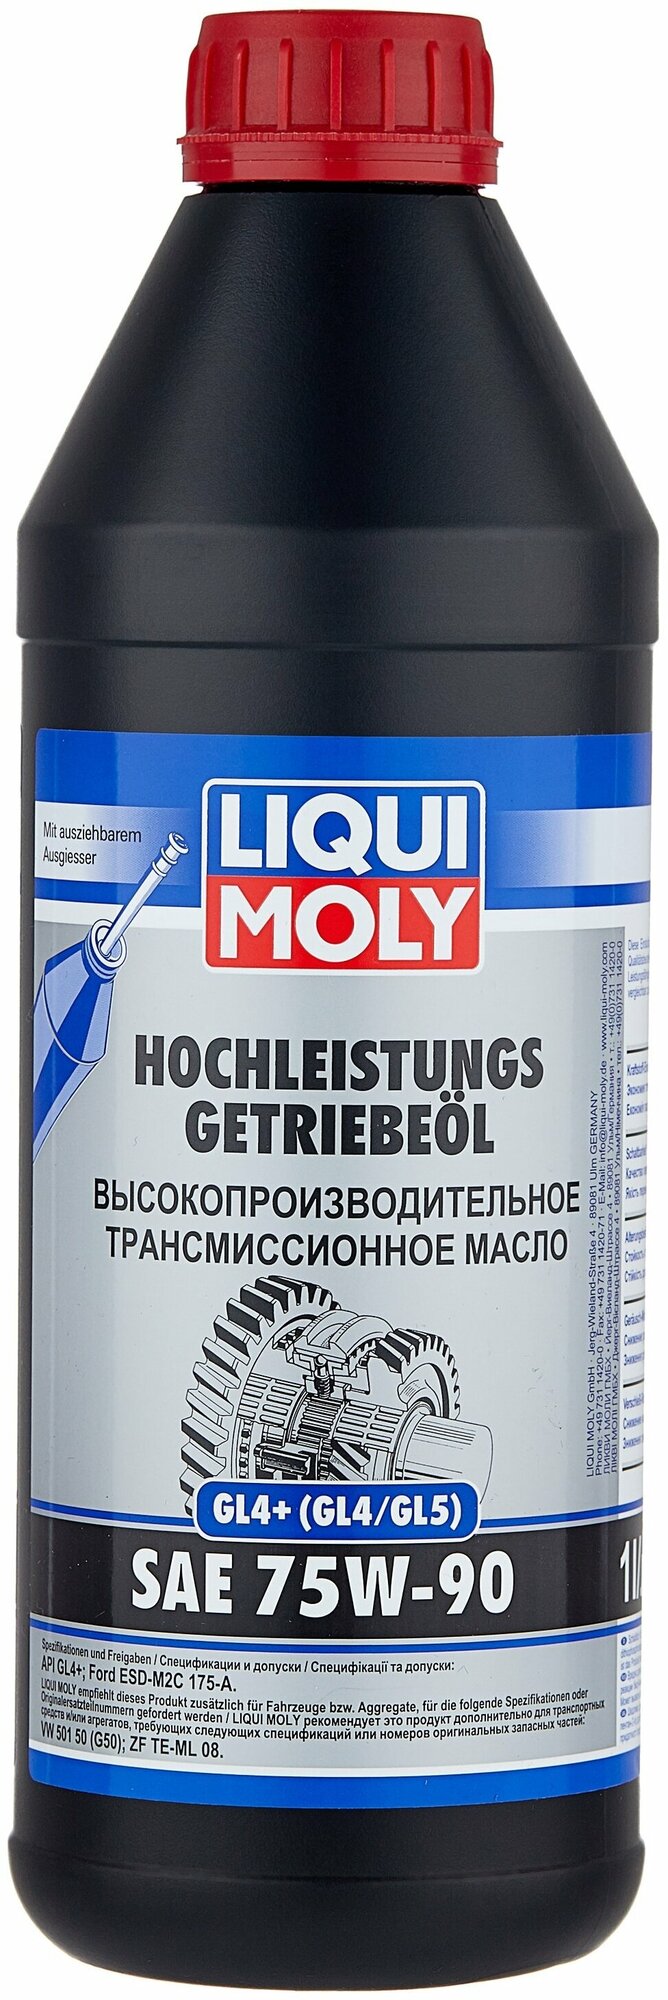 Liqui Moly трансмиссионное масло Hochleistungs-Getrieb 75W-90 GL-4+ 1л. (3979)